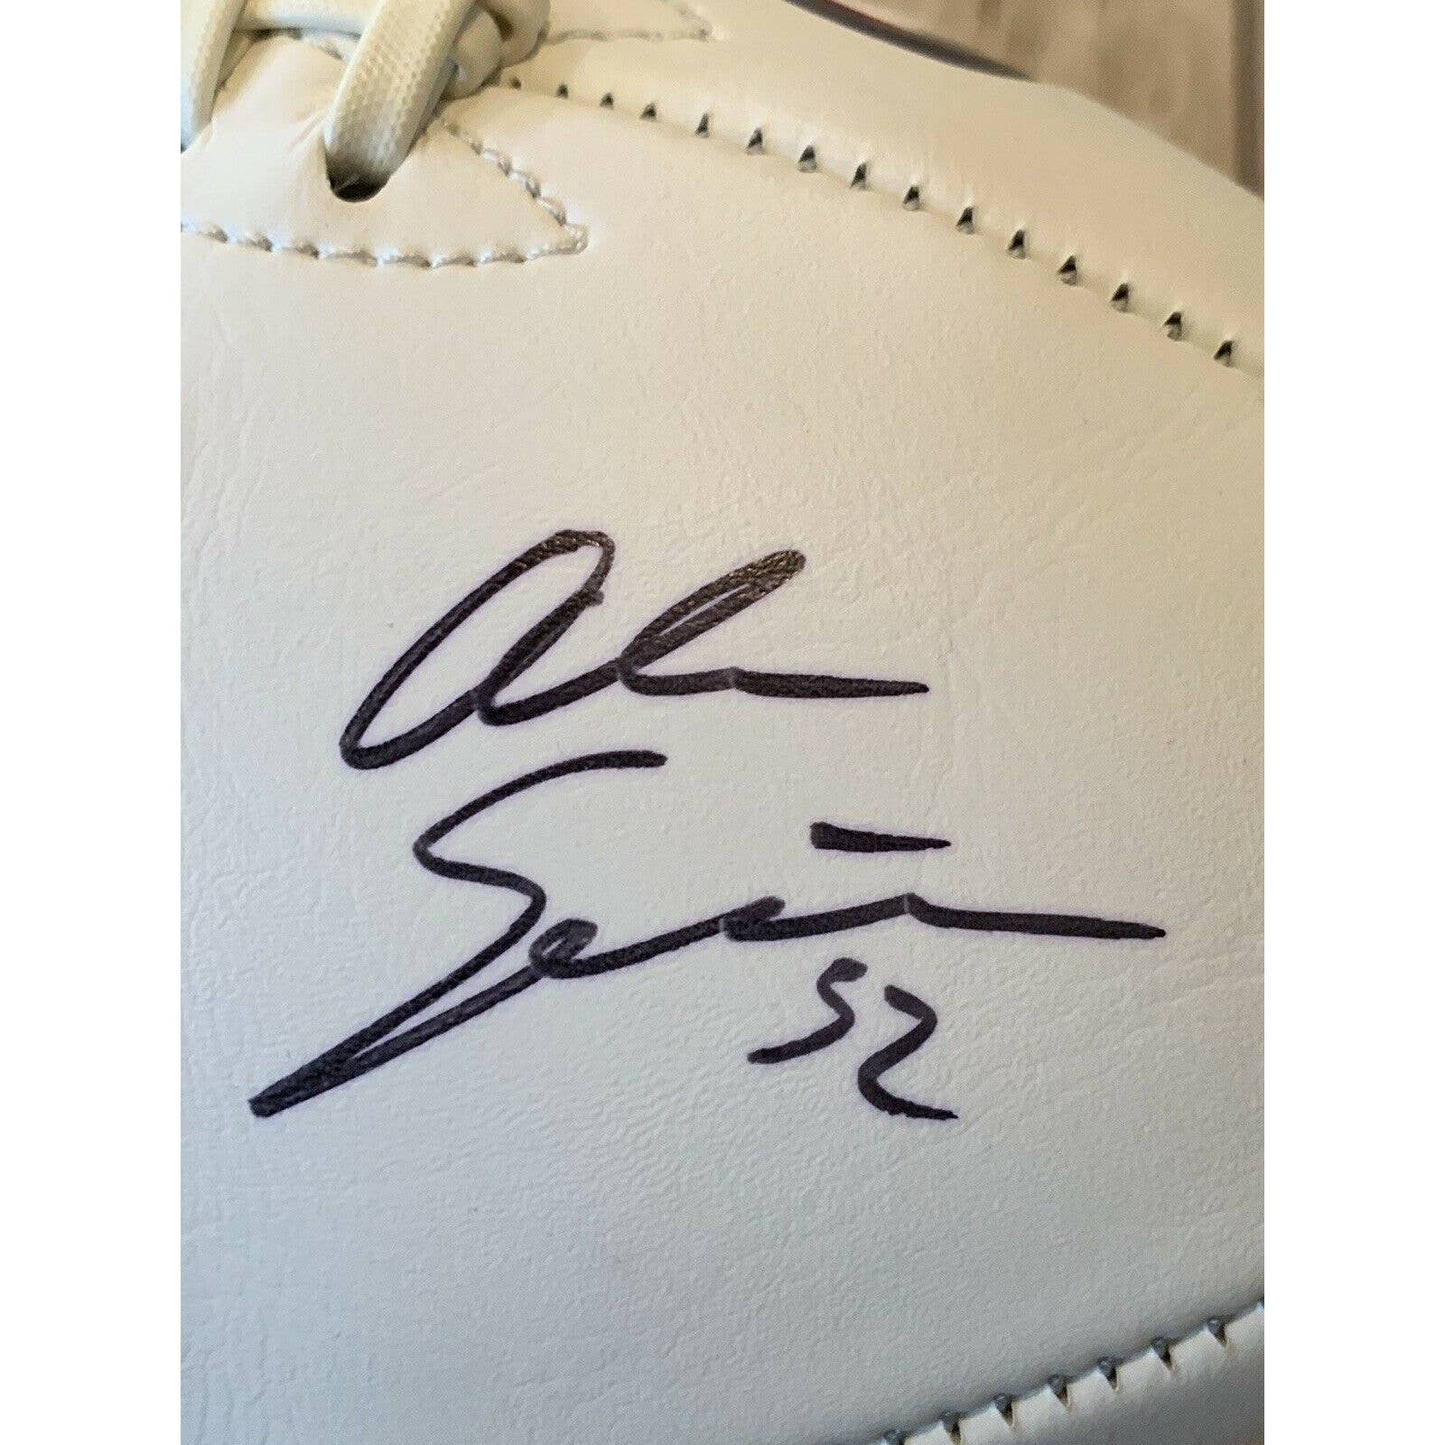 Alec Ogletree Autographed/Signed Football JSA COA New York Giants - TreasuresEvolved